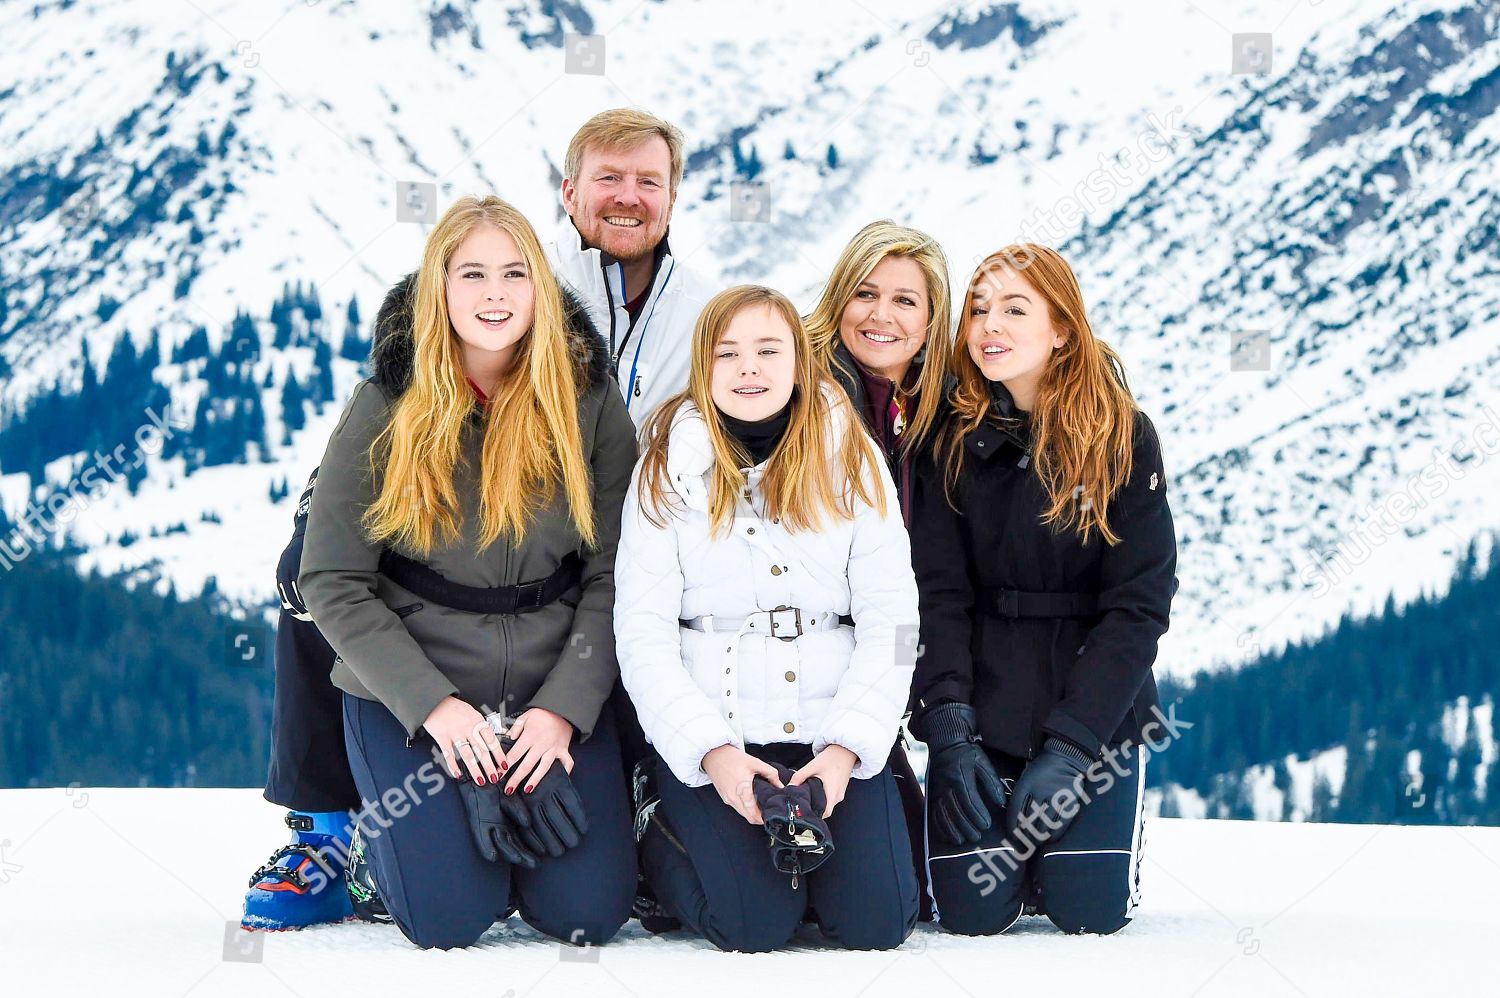 dutch-royal-family-winter-holiday-photocall-lech-austria-shutterstock-editorial-10566567h.jpg